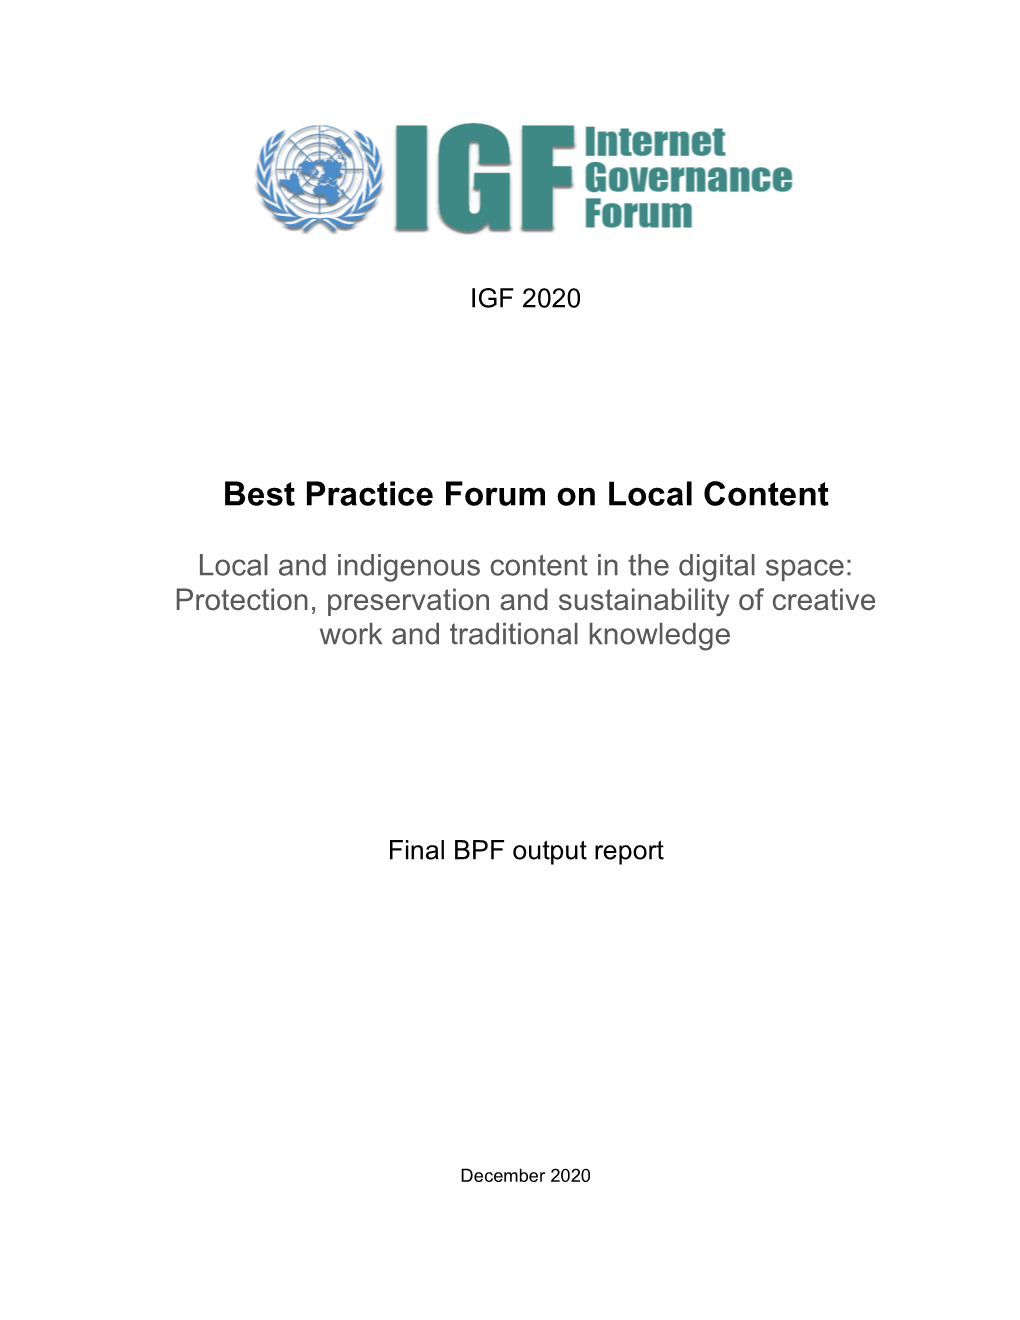 Best Practice Forum on Local Content